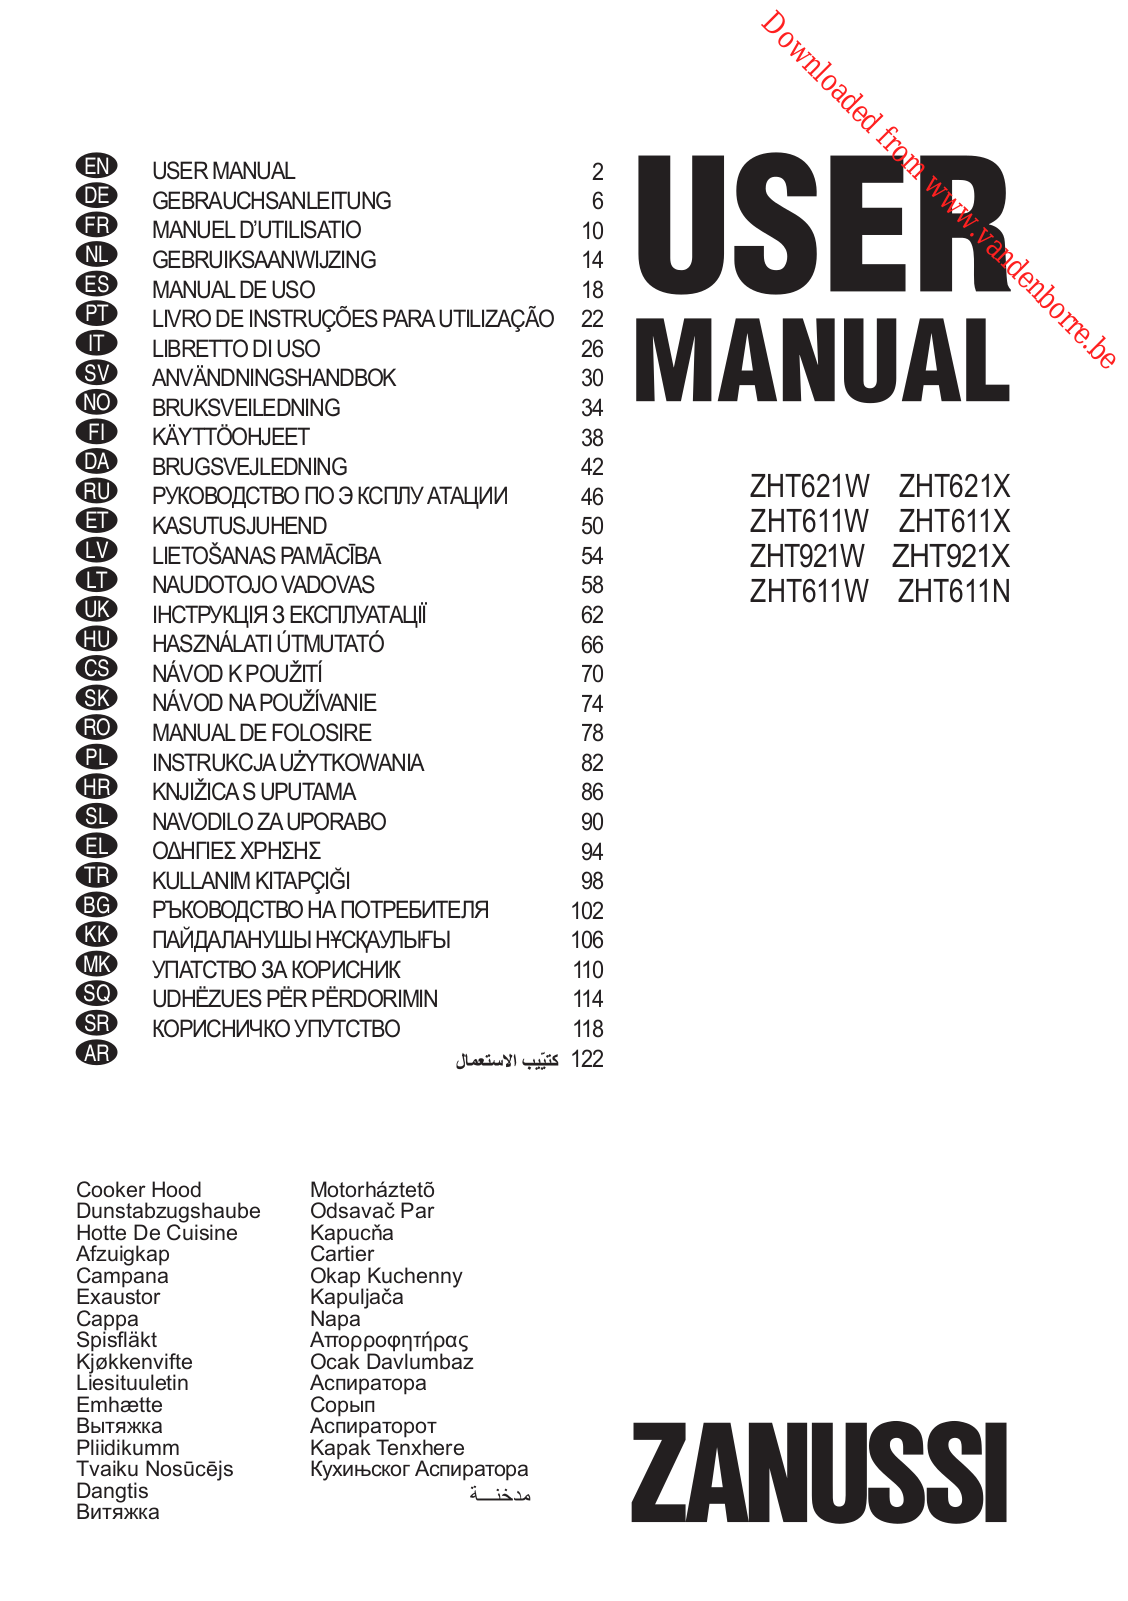 ZANUSSI ZHT611W4 User Manual